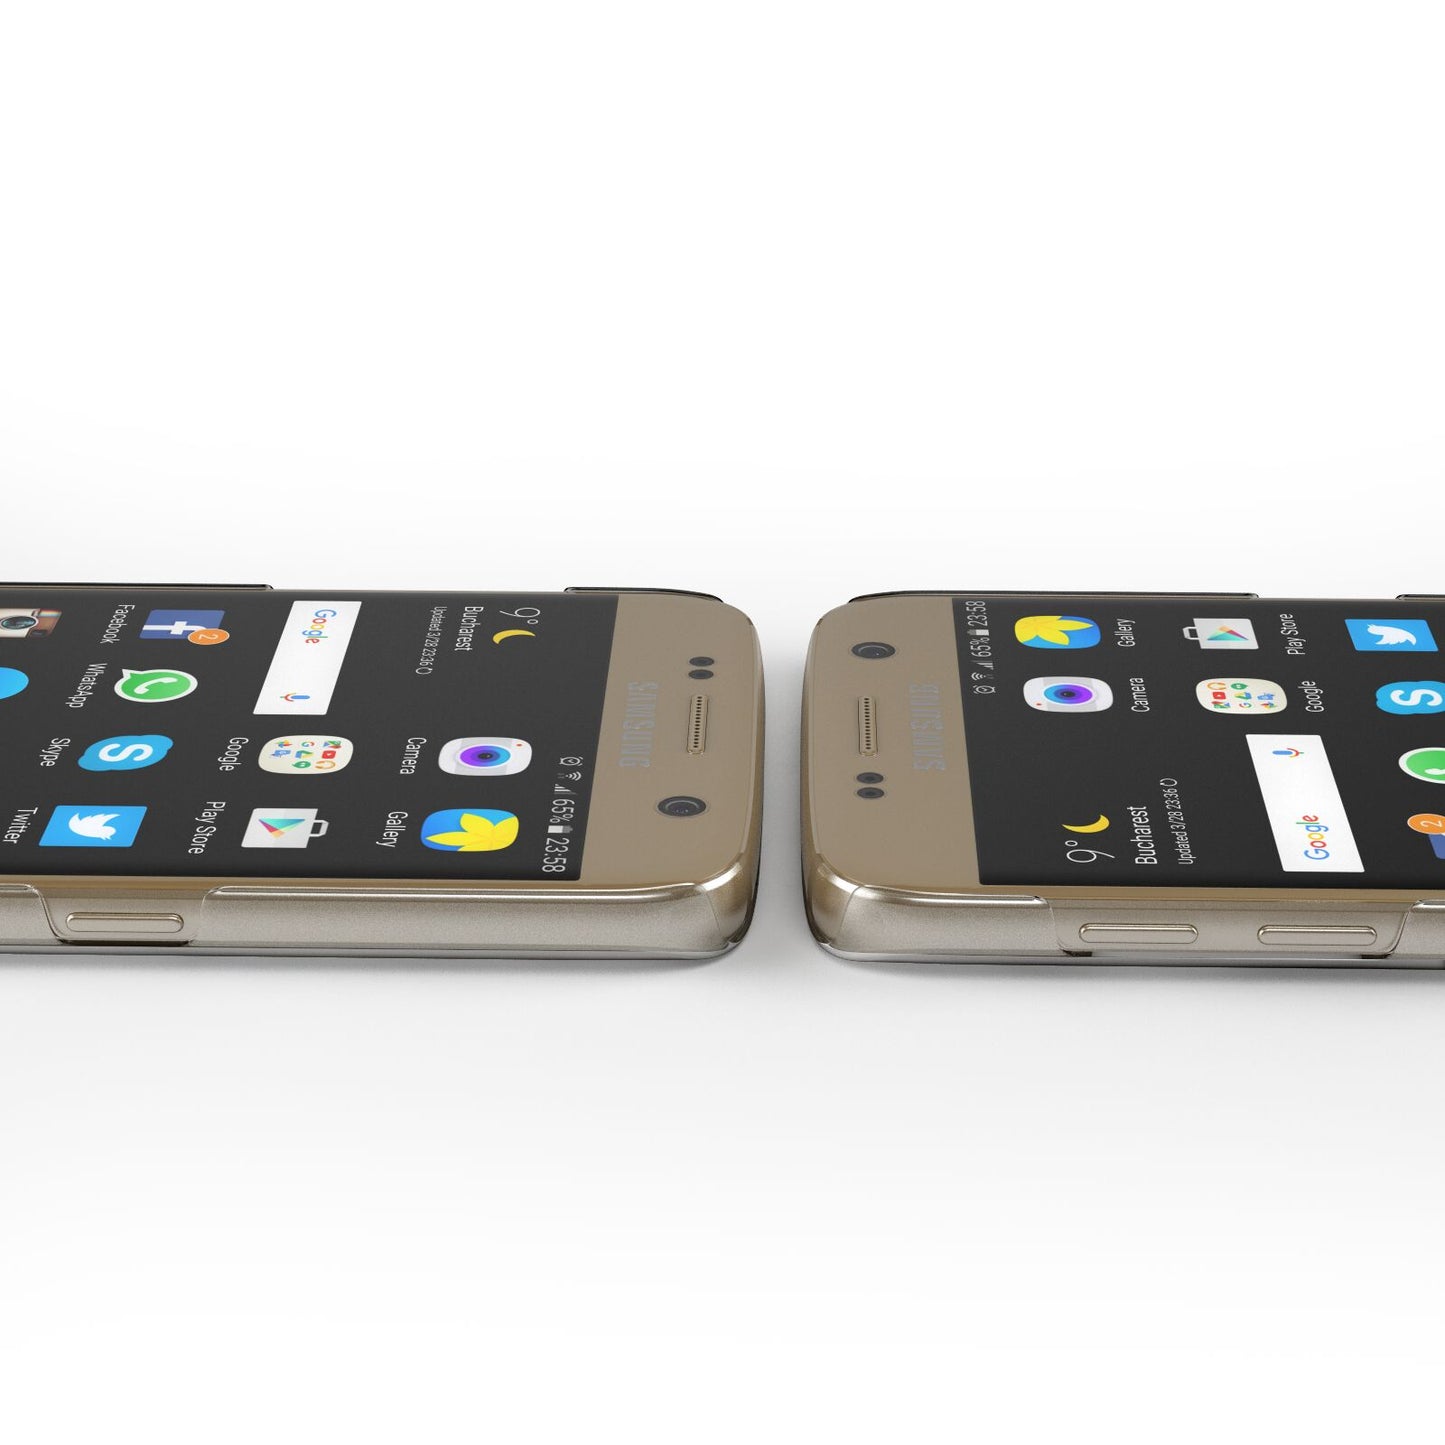 Cirneco Dell Etna Personalised Samsung Galaxy Case Ports Cutout